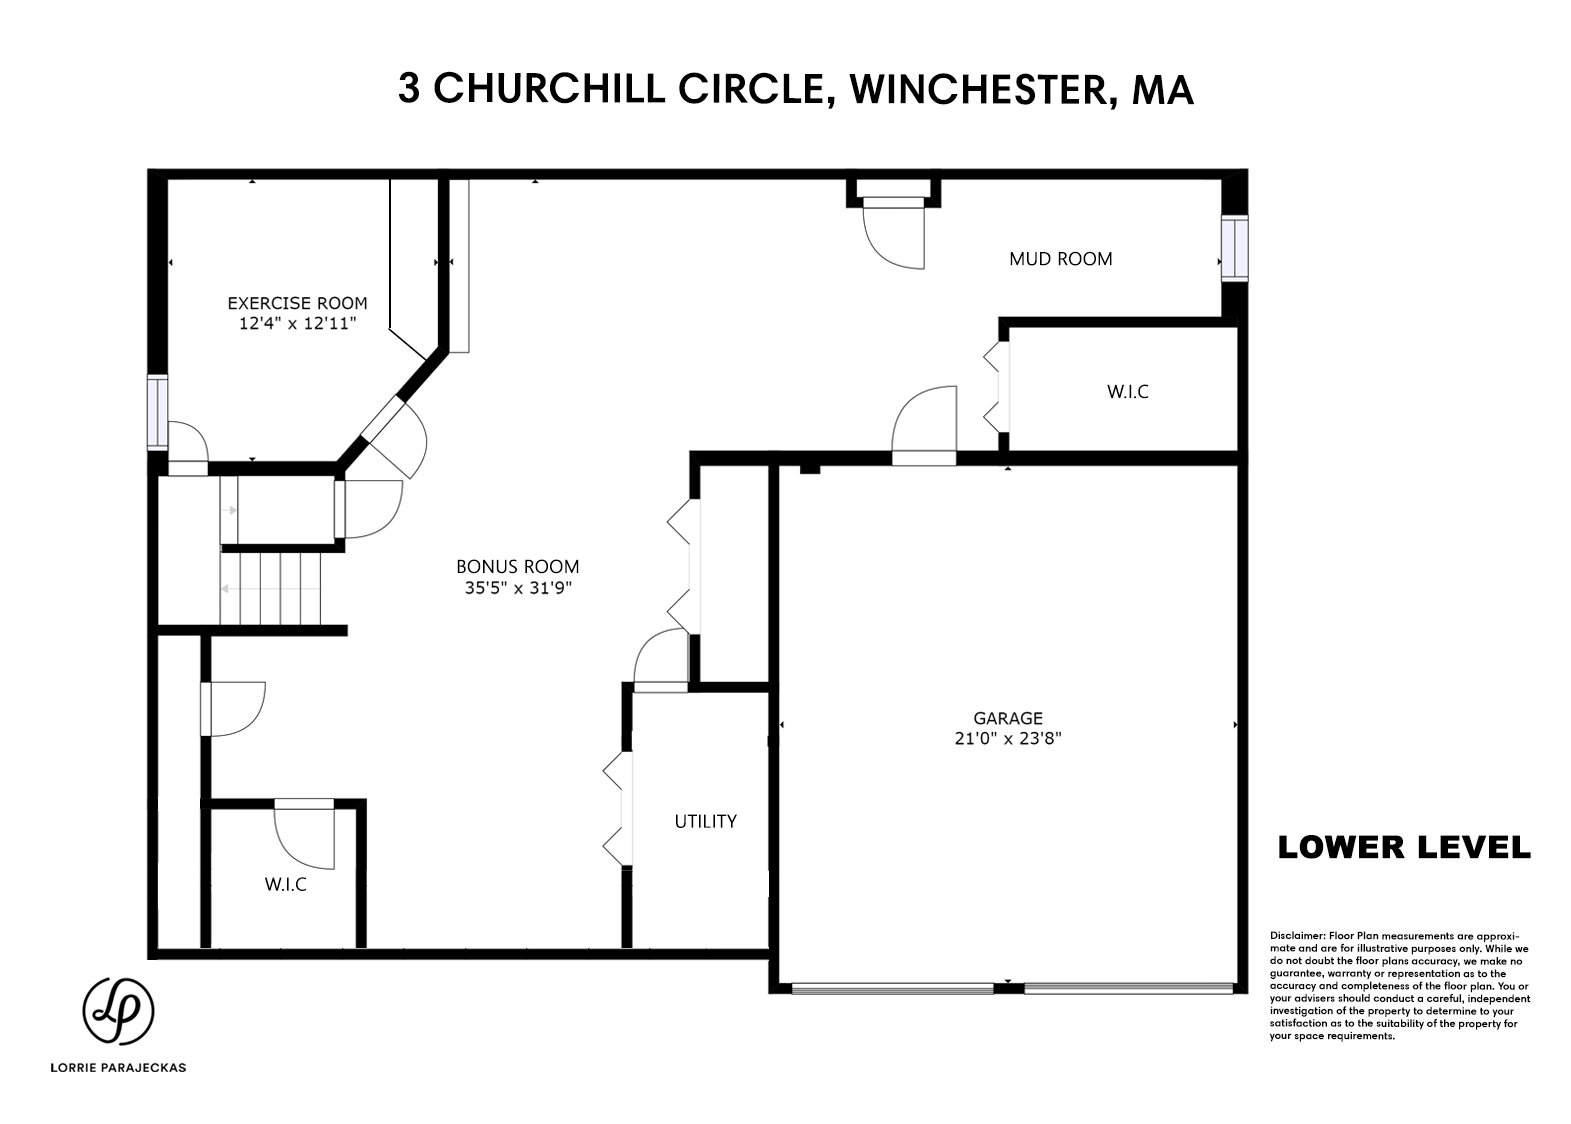 3 Churchill Cir- Floor Plans_LOWER_NEW 43021 - BRANDED.jpg